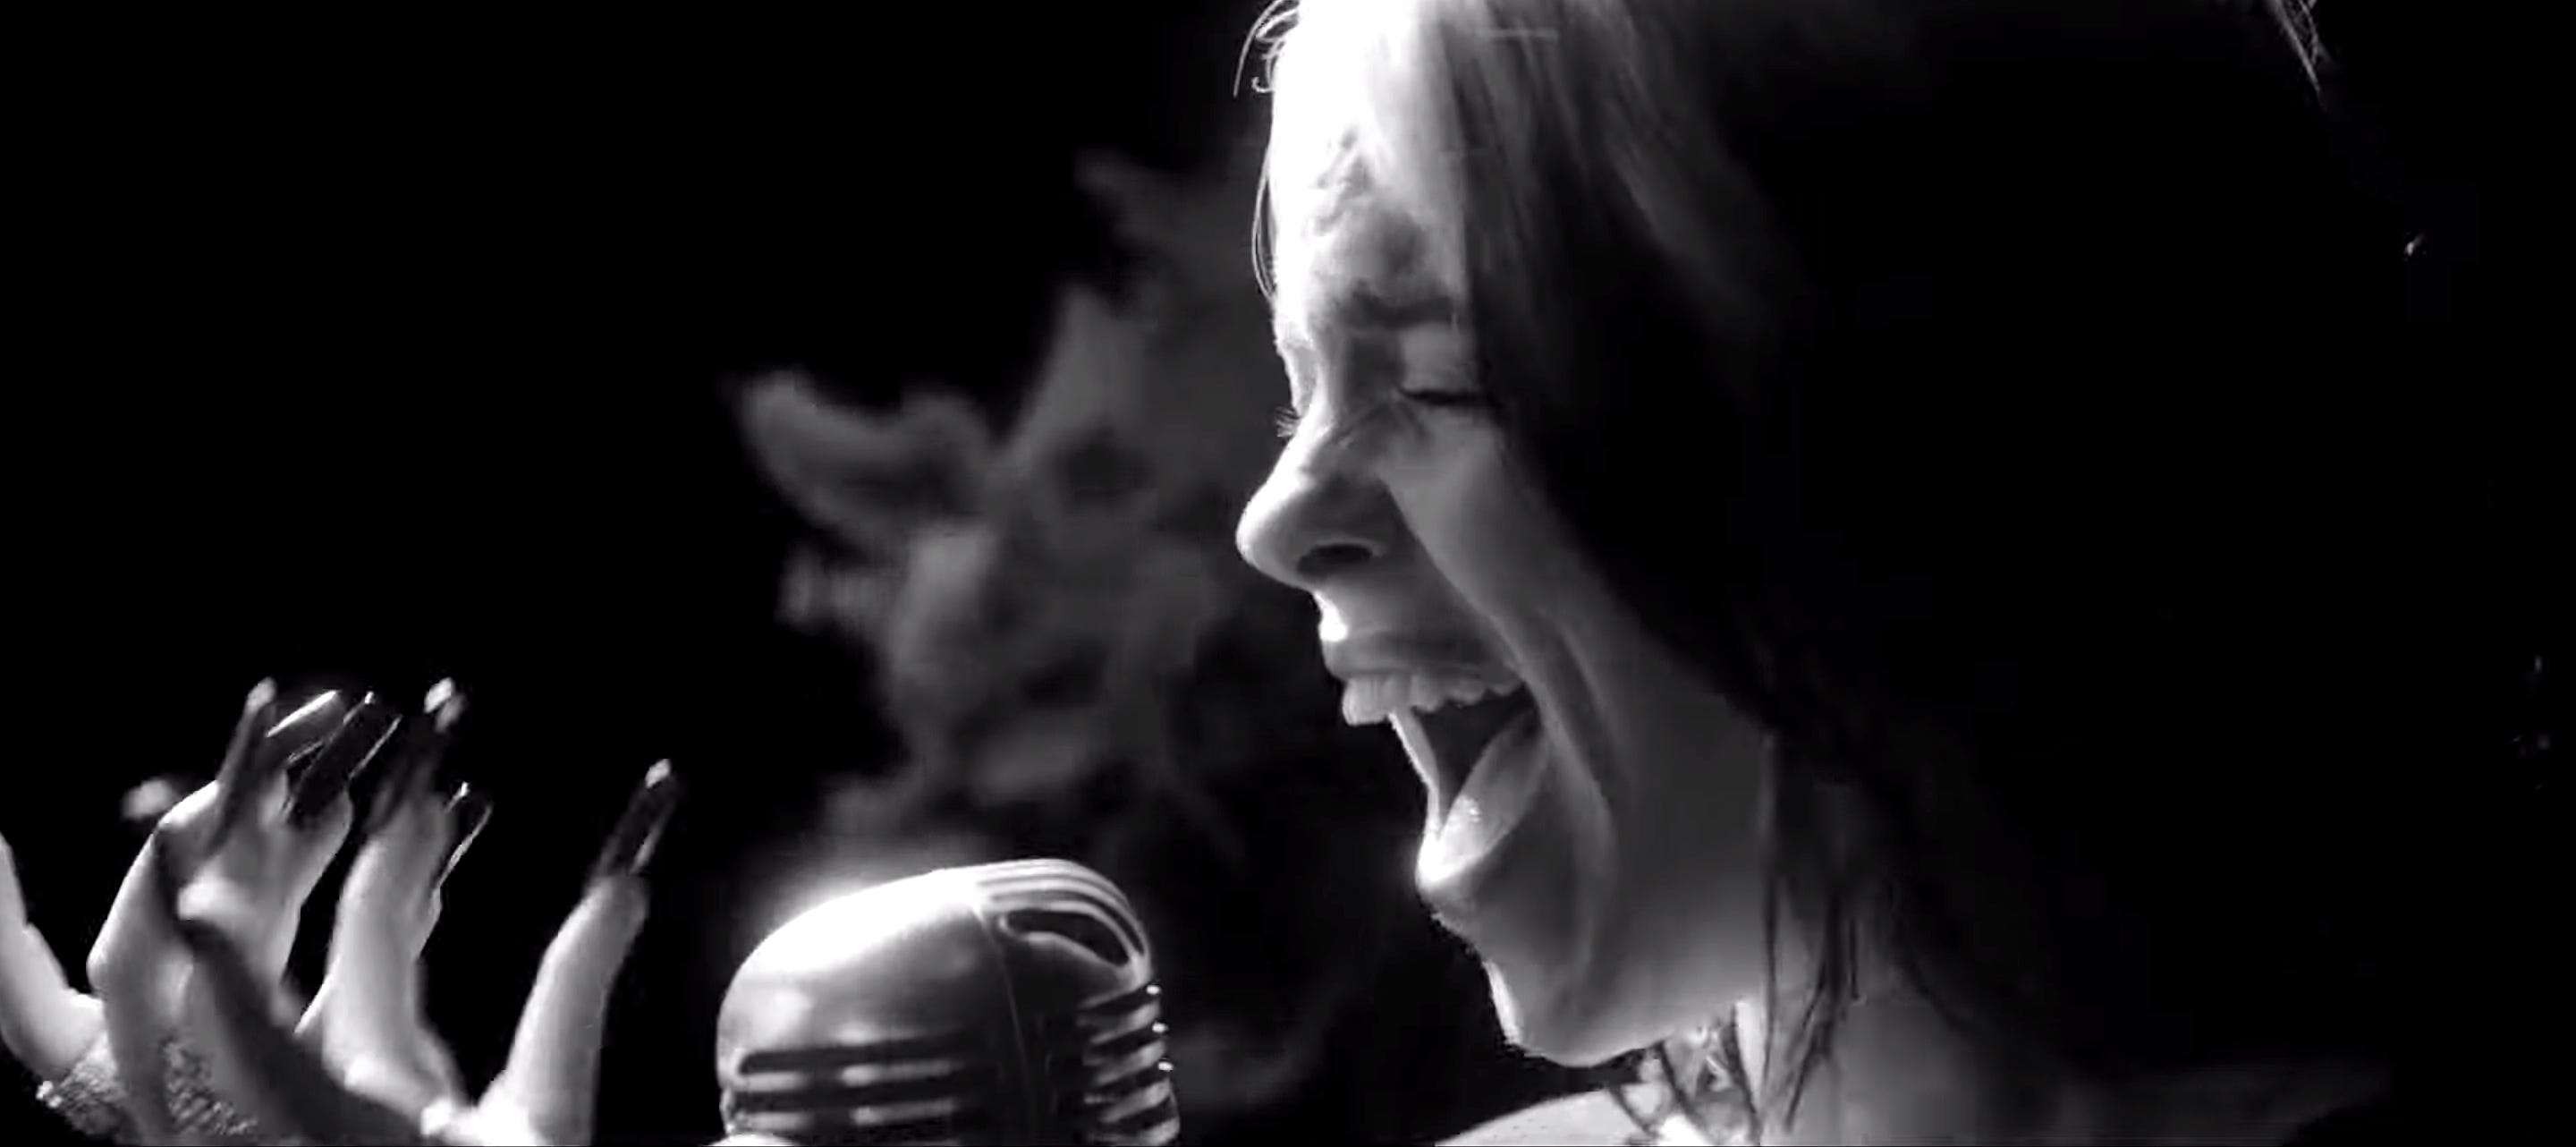 Billie Eilish Shares 'Your Power' Live Performance Video: Watch